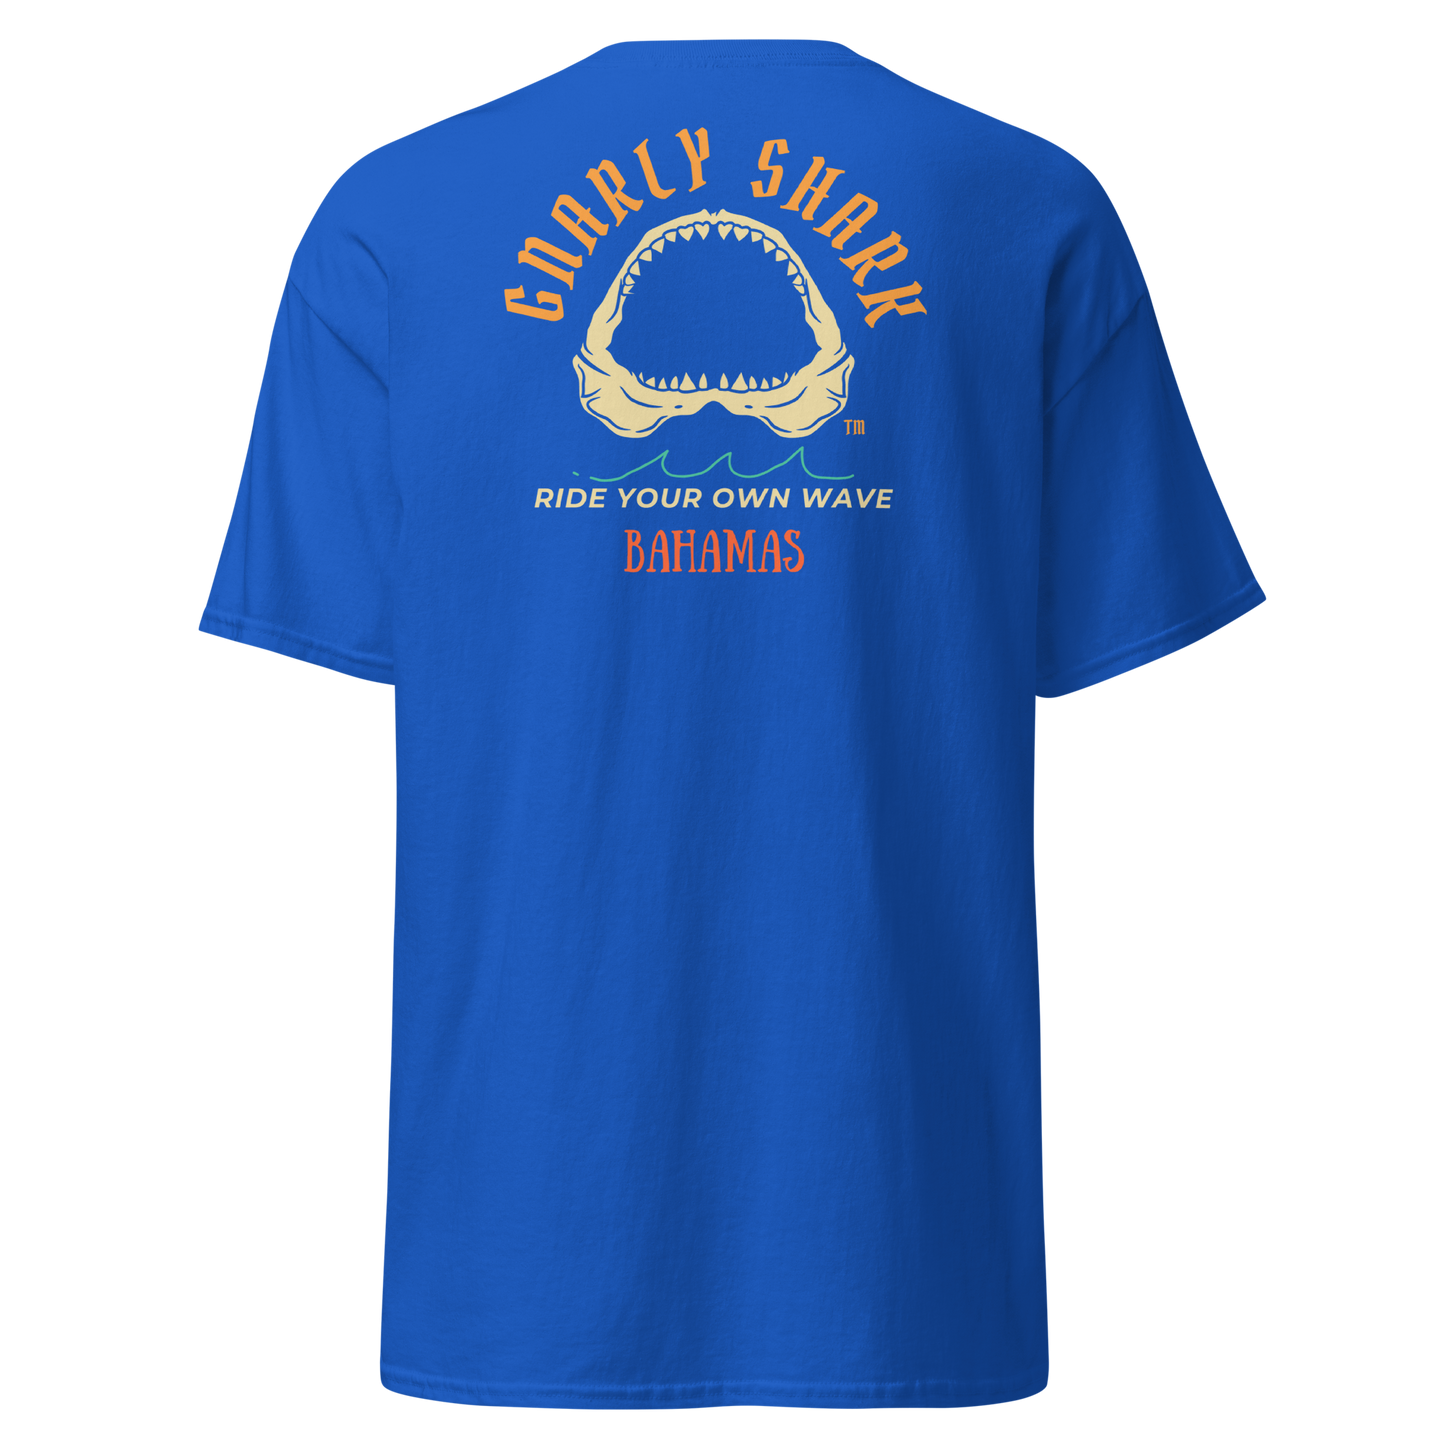 Gnarly Shark T-Shirt - Bahamas Front / Back - Gildan classic 5000